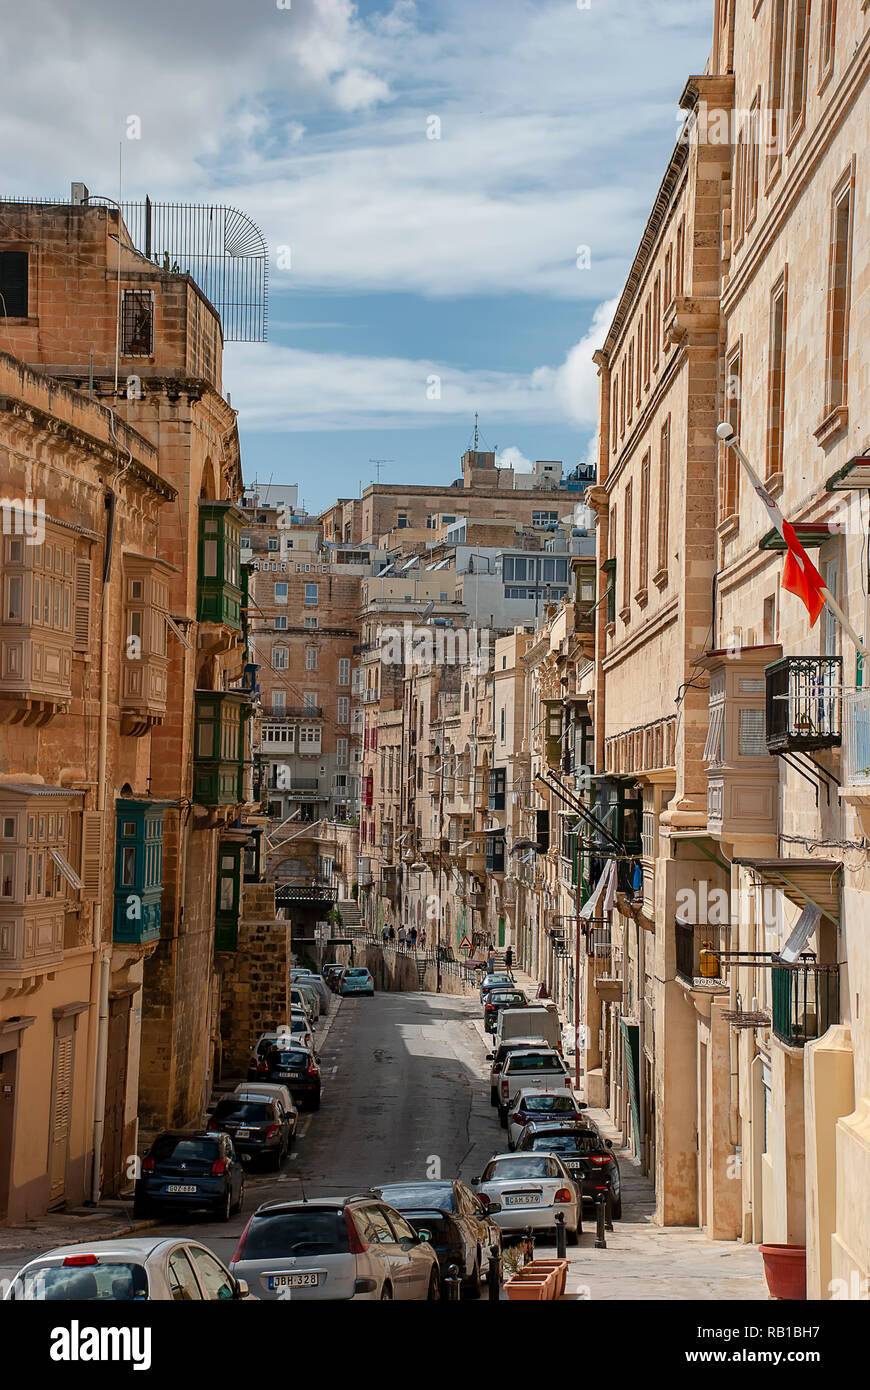 Narrow streets and buildings in Valletta, Malta Stock Photo